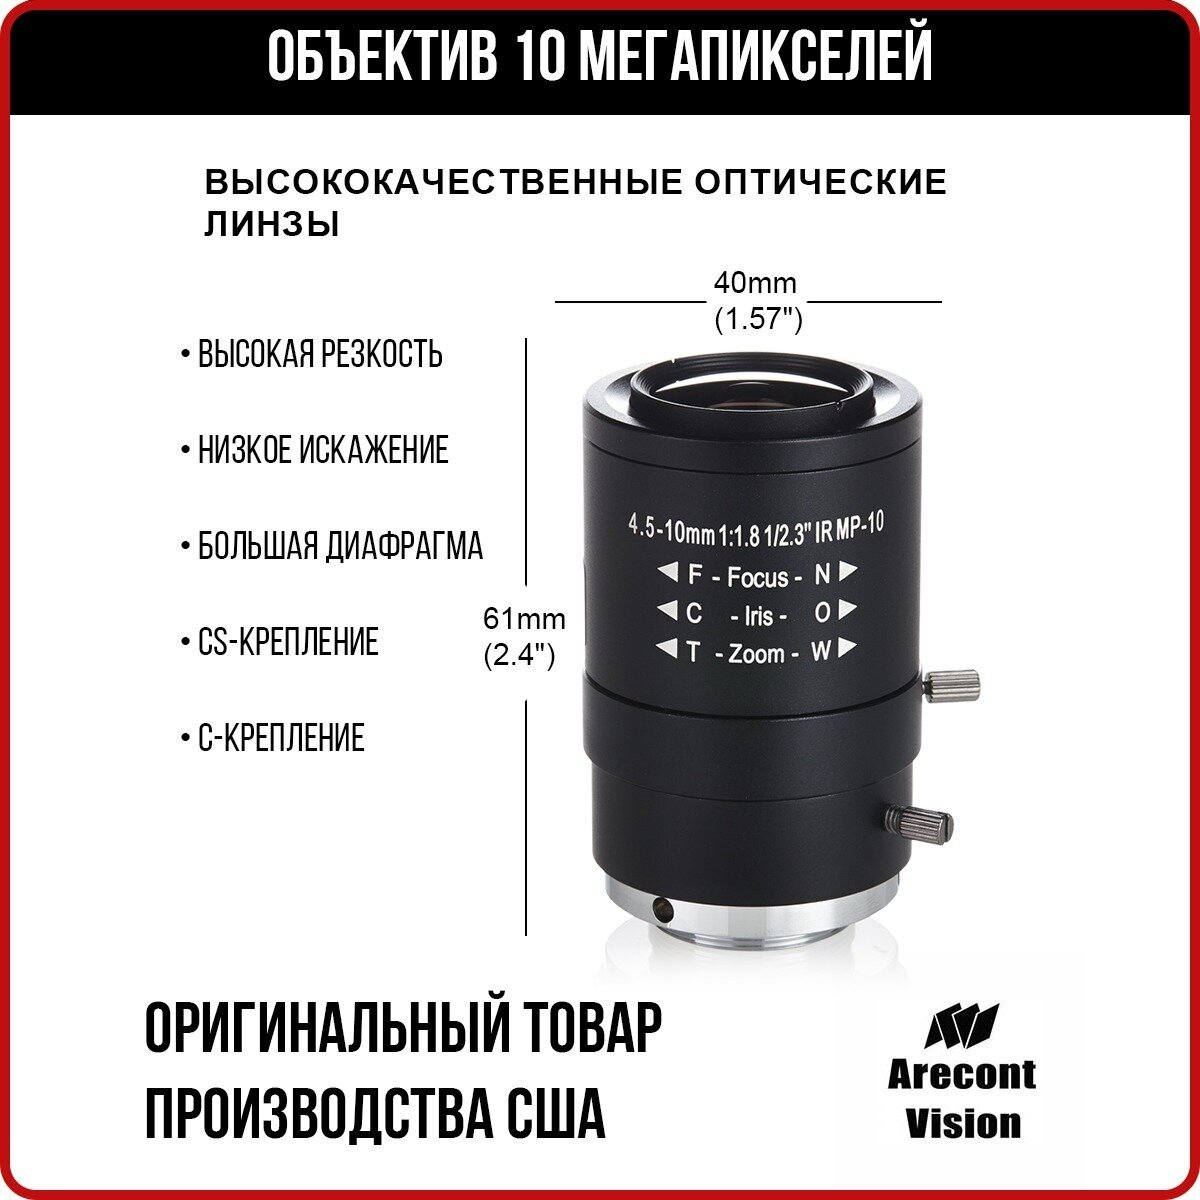 Объектив Arecont Vision Delax Market 10 mpix UHD 4.5-10 mm 1/2.3